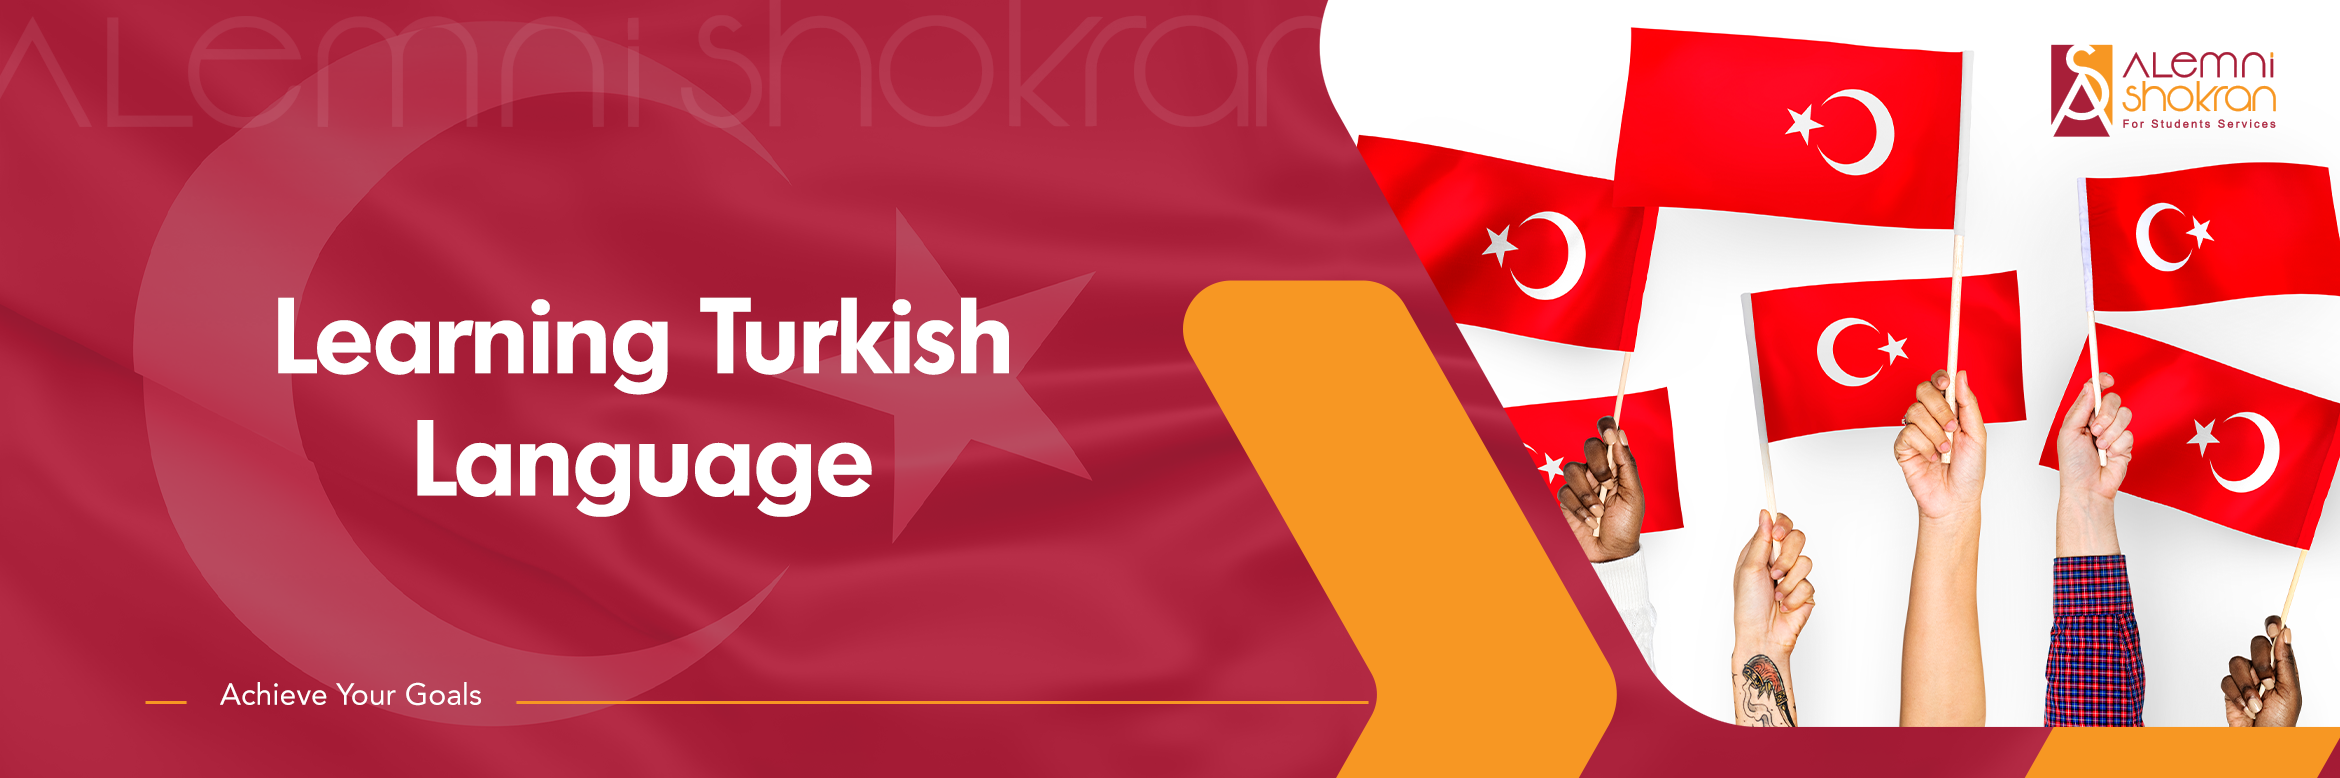 Learning-Turkish-Language